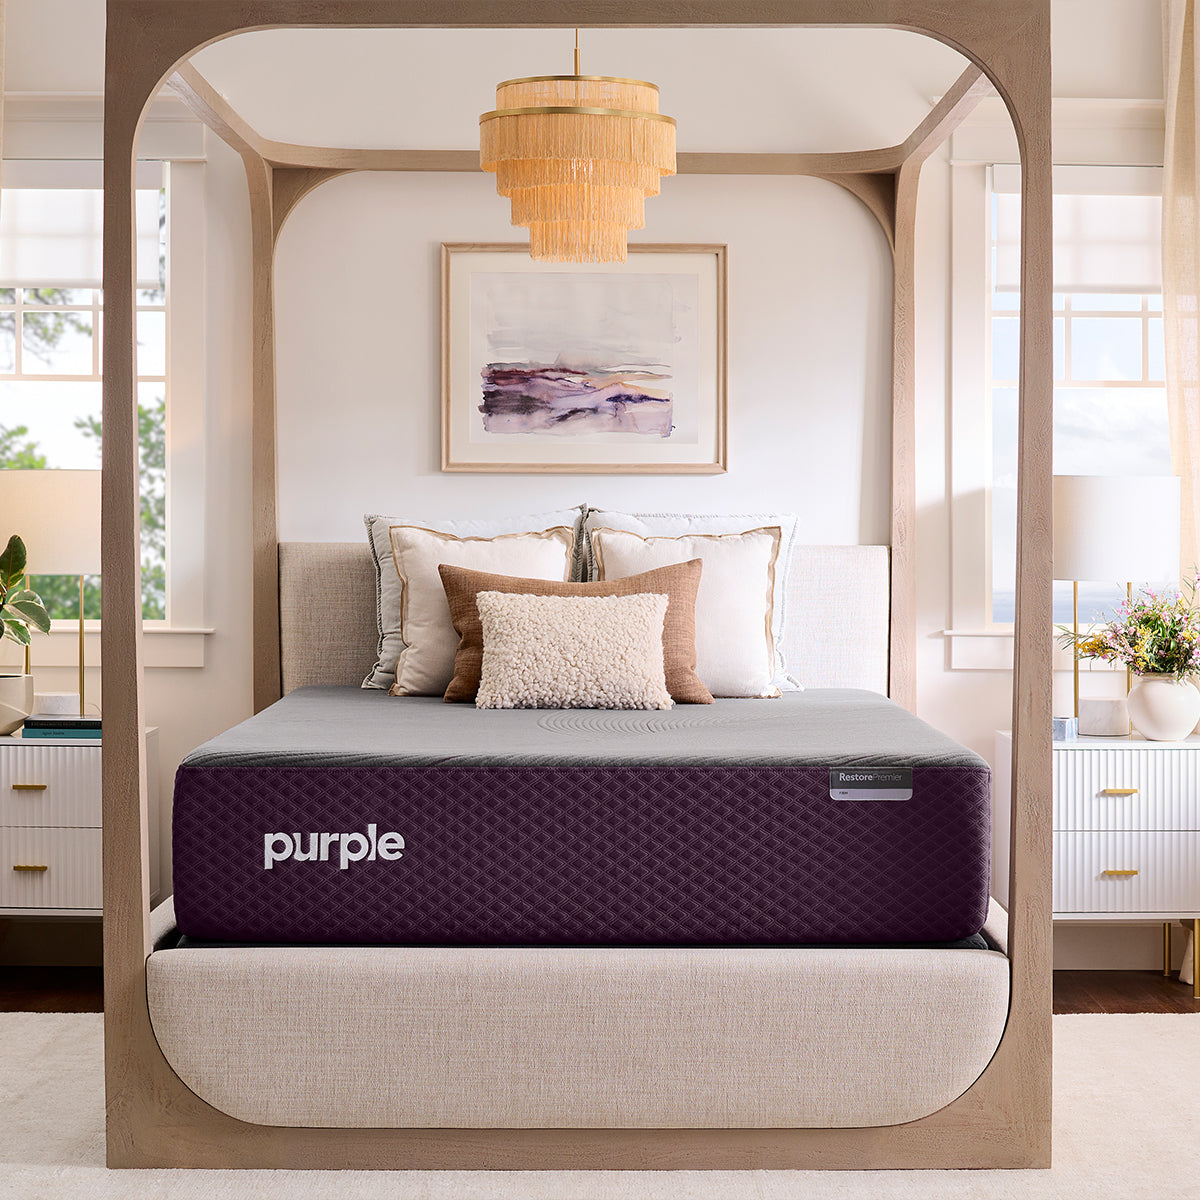 Purple Restore Premier Firm Mattress in bedroom